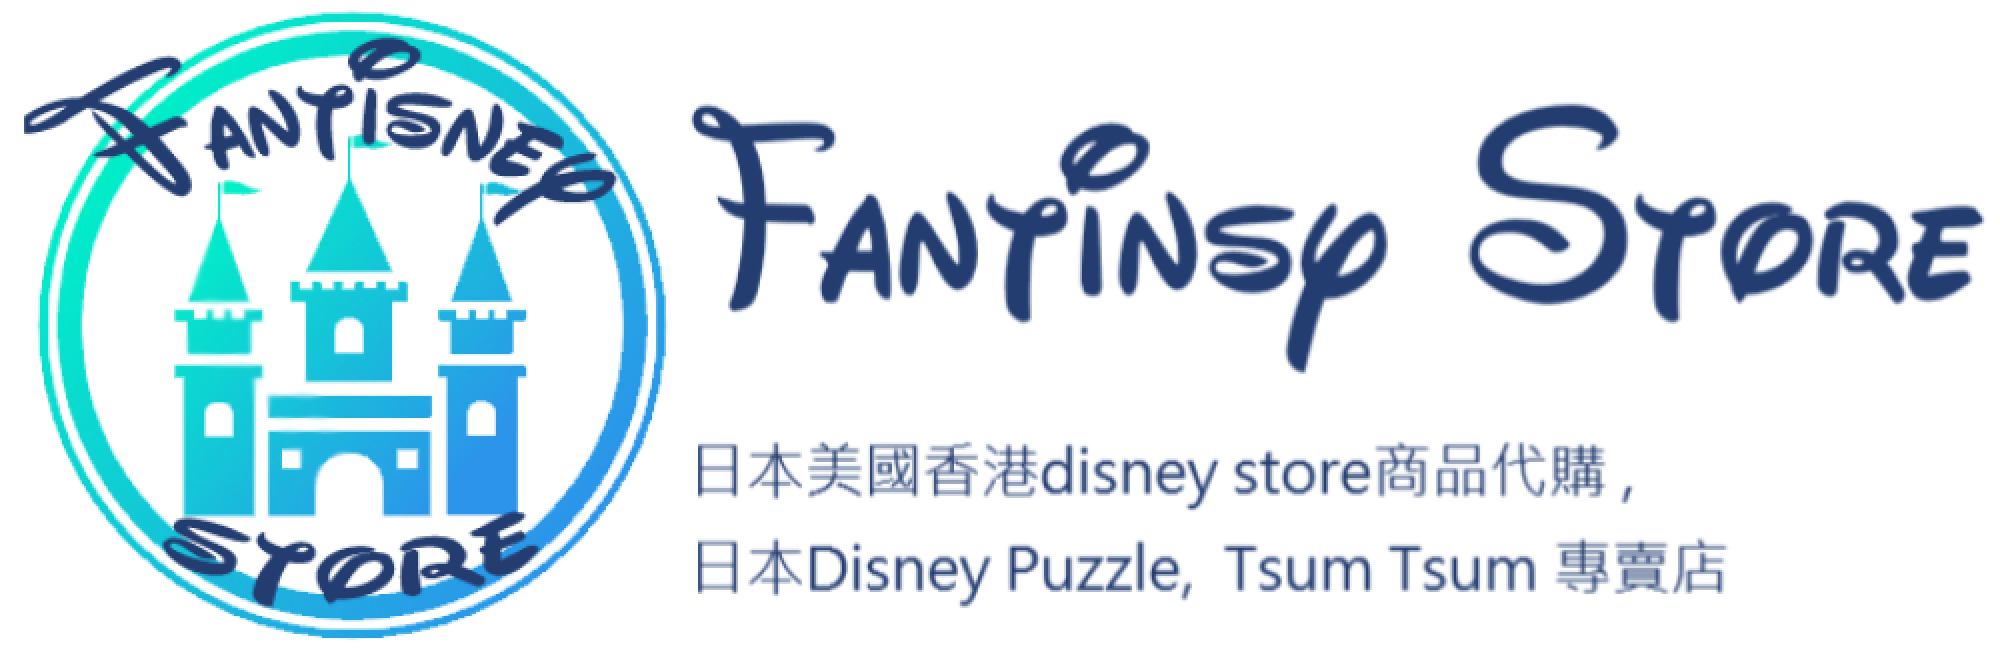 Fantisney Store